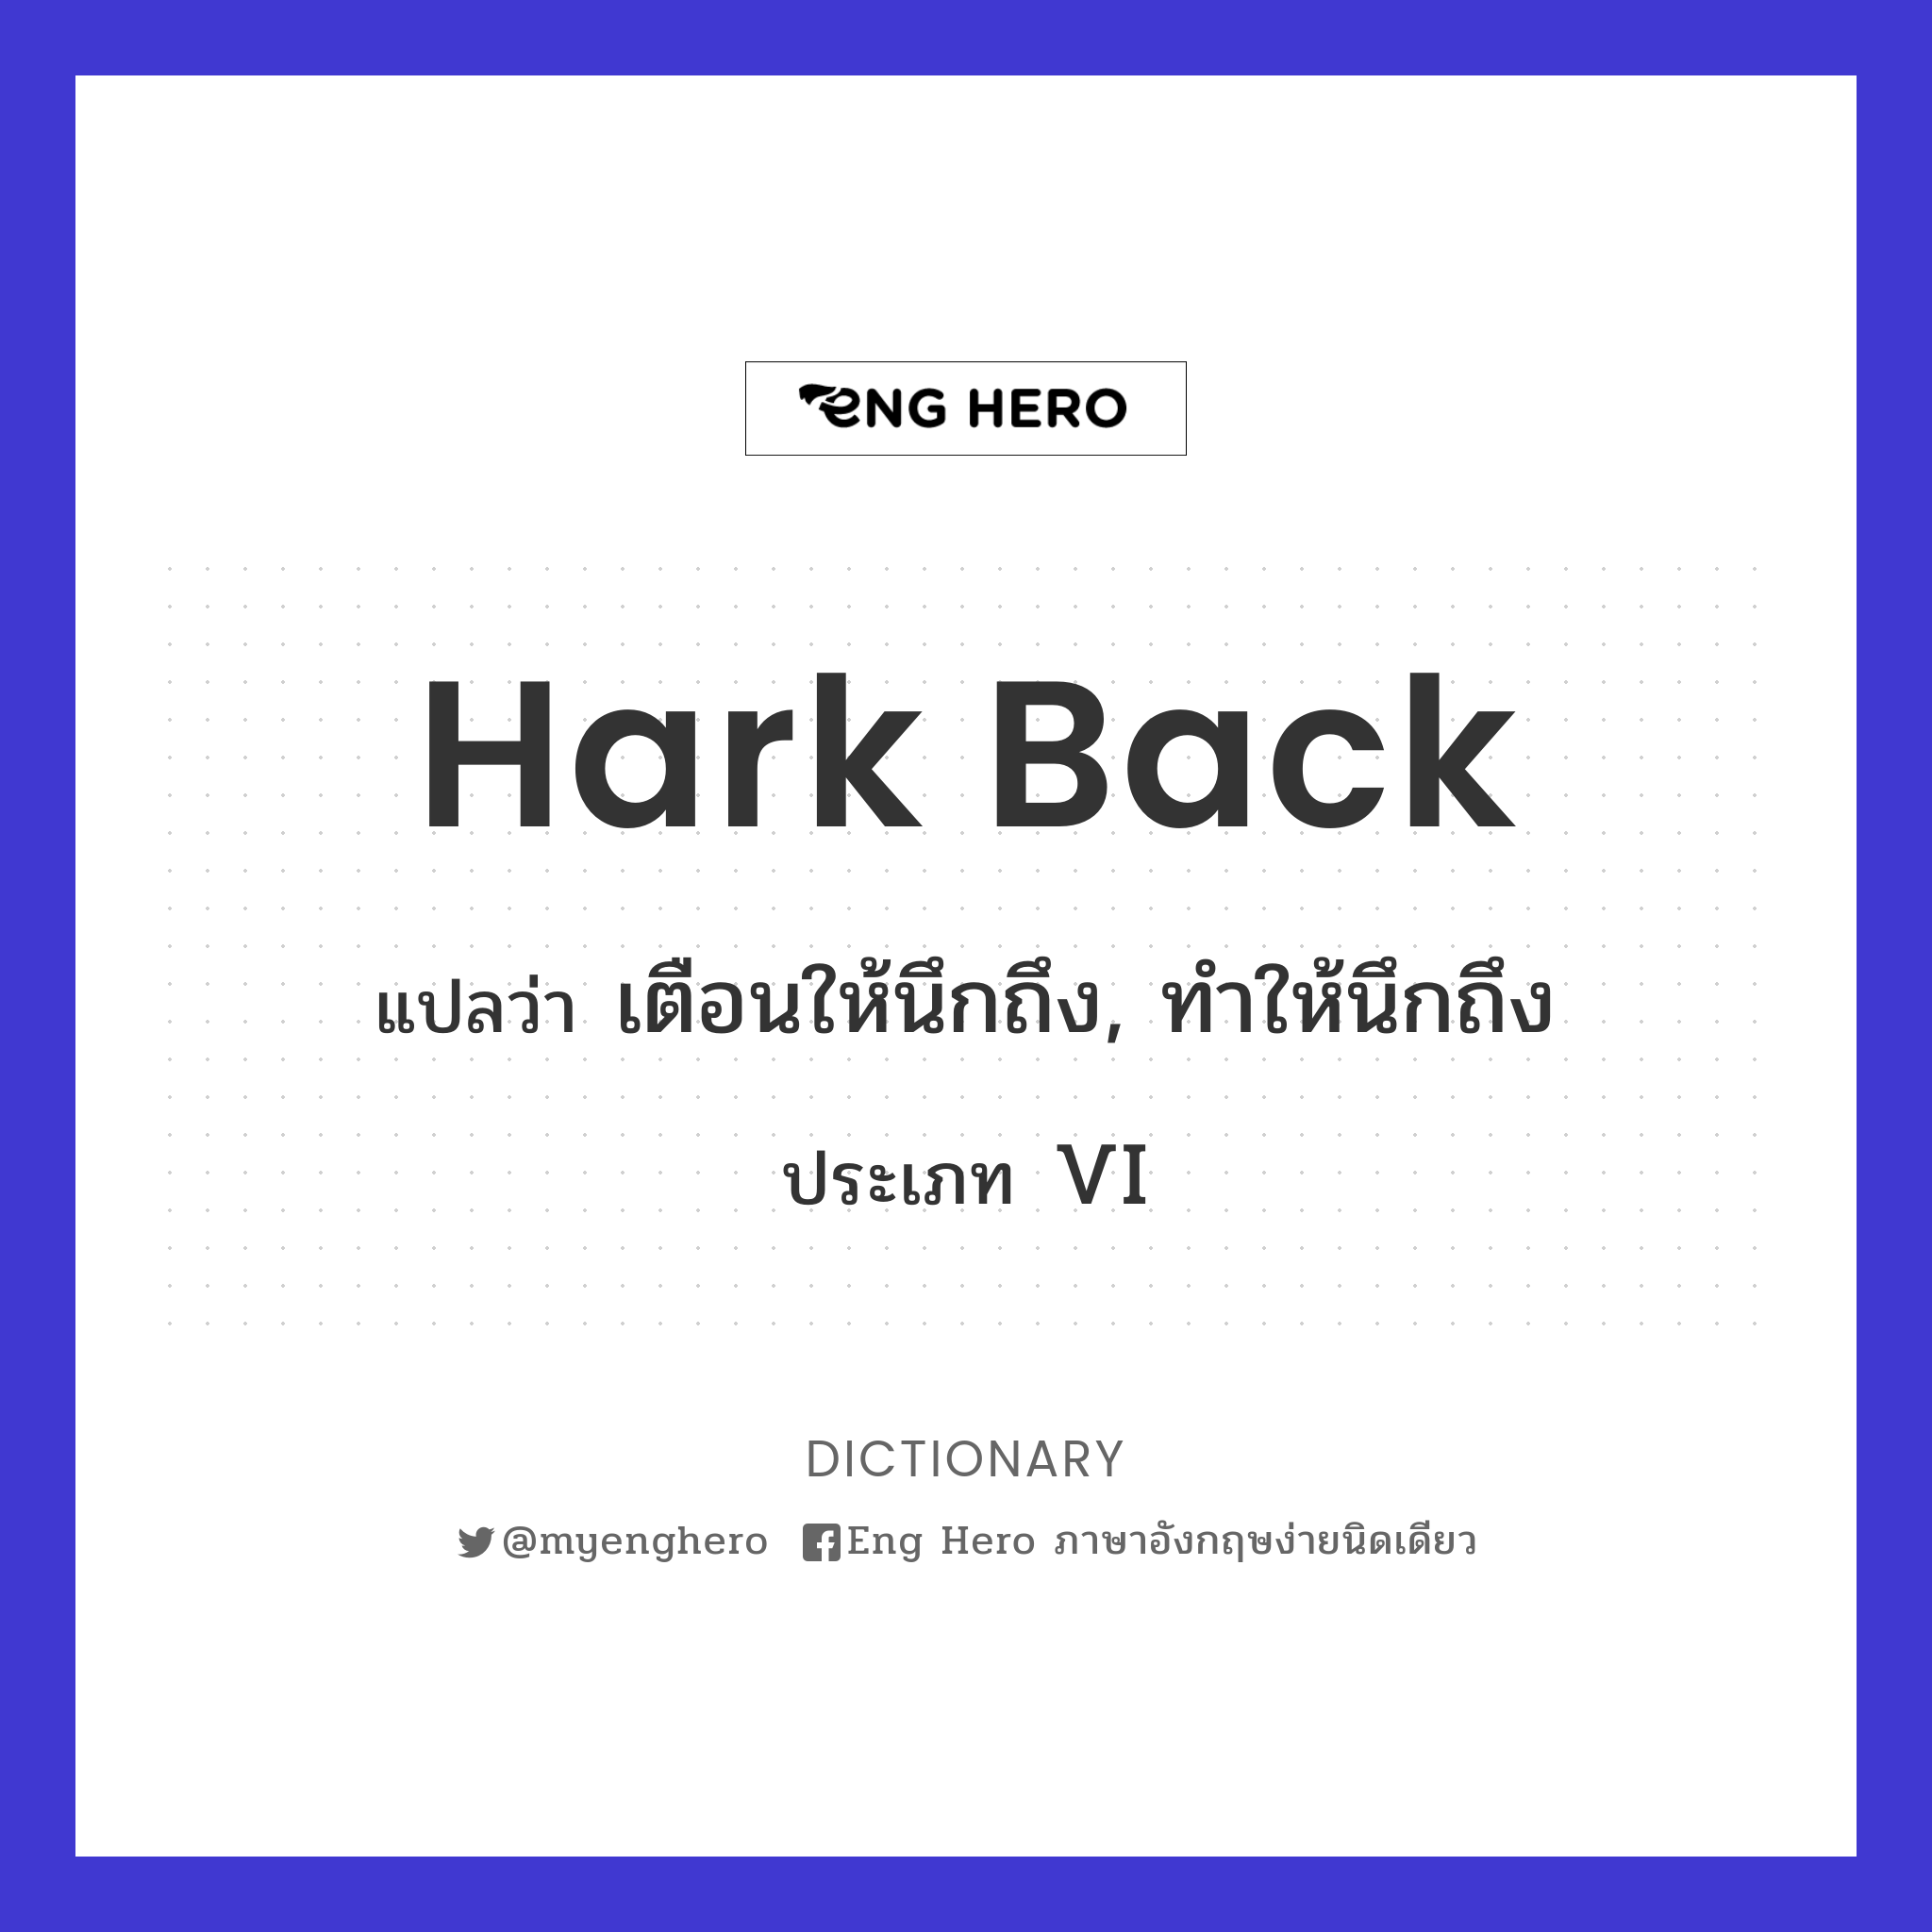 hark back